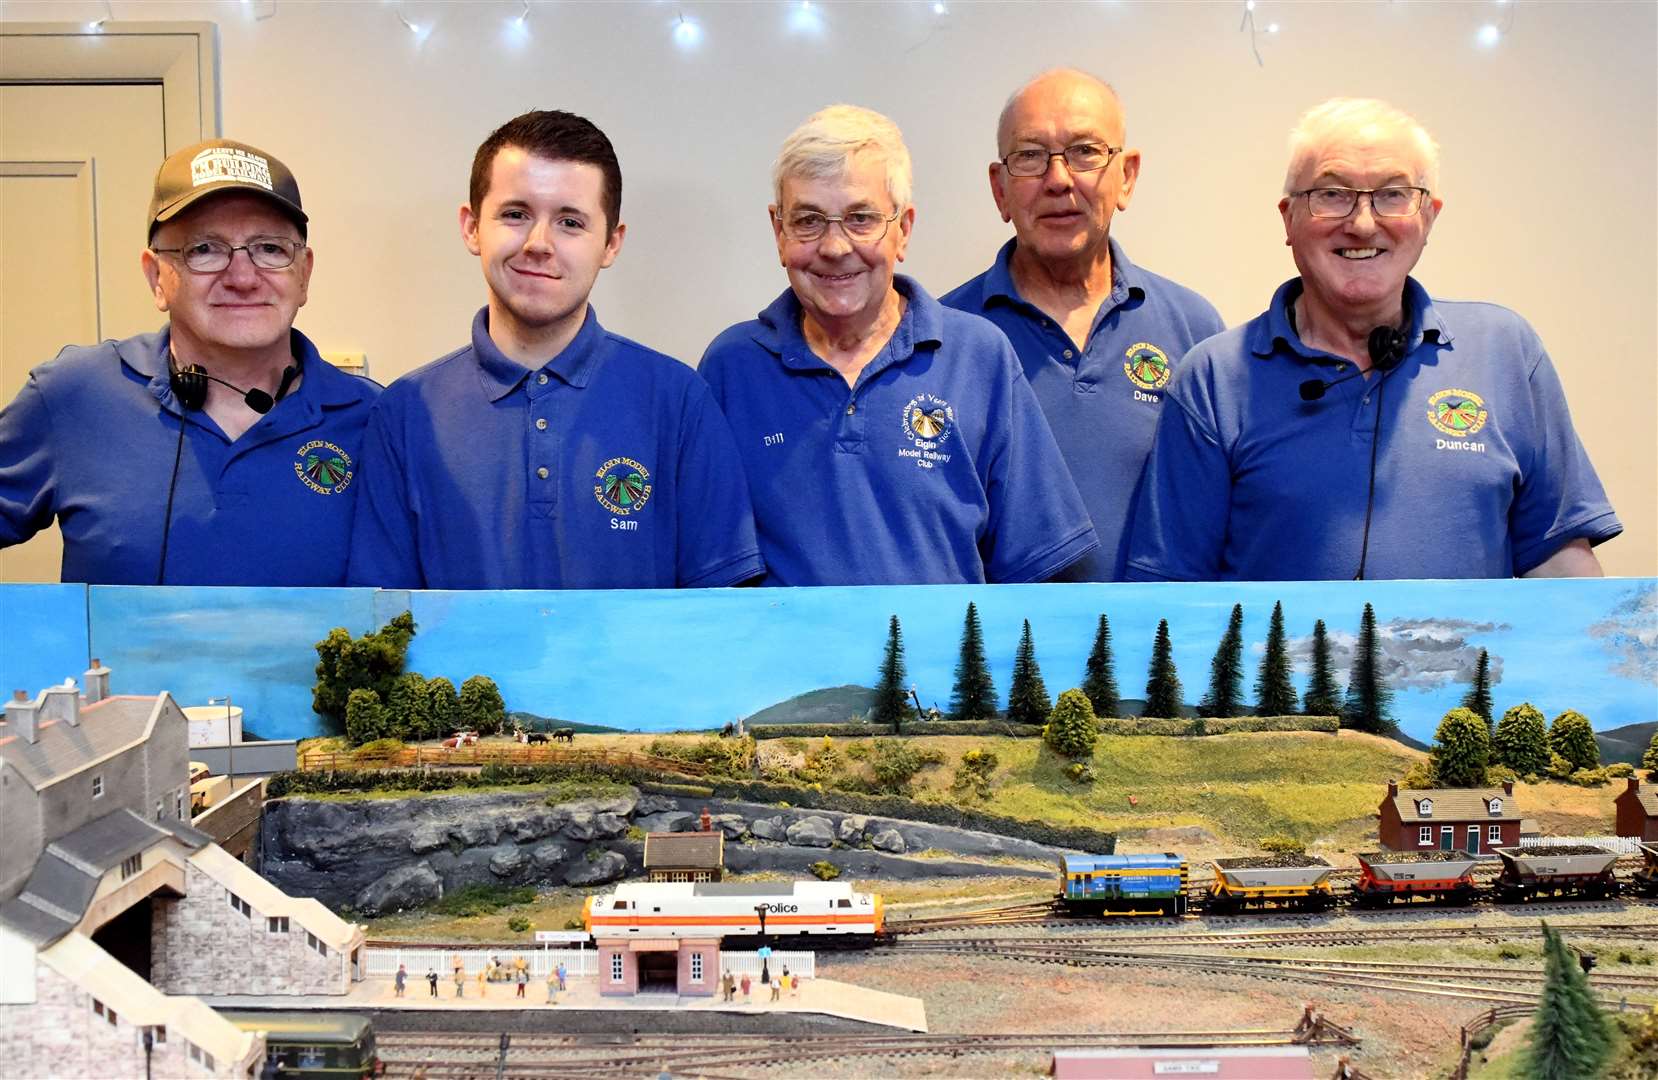 Hugh Grant, Sam Logan, Bill Hossack, Dave Spratt and Duncan Macwatt from the Elgin Model Railway Club. Picture: James Mackenzie.